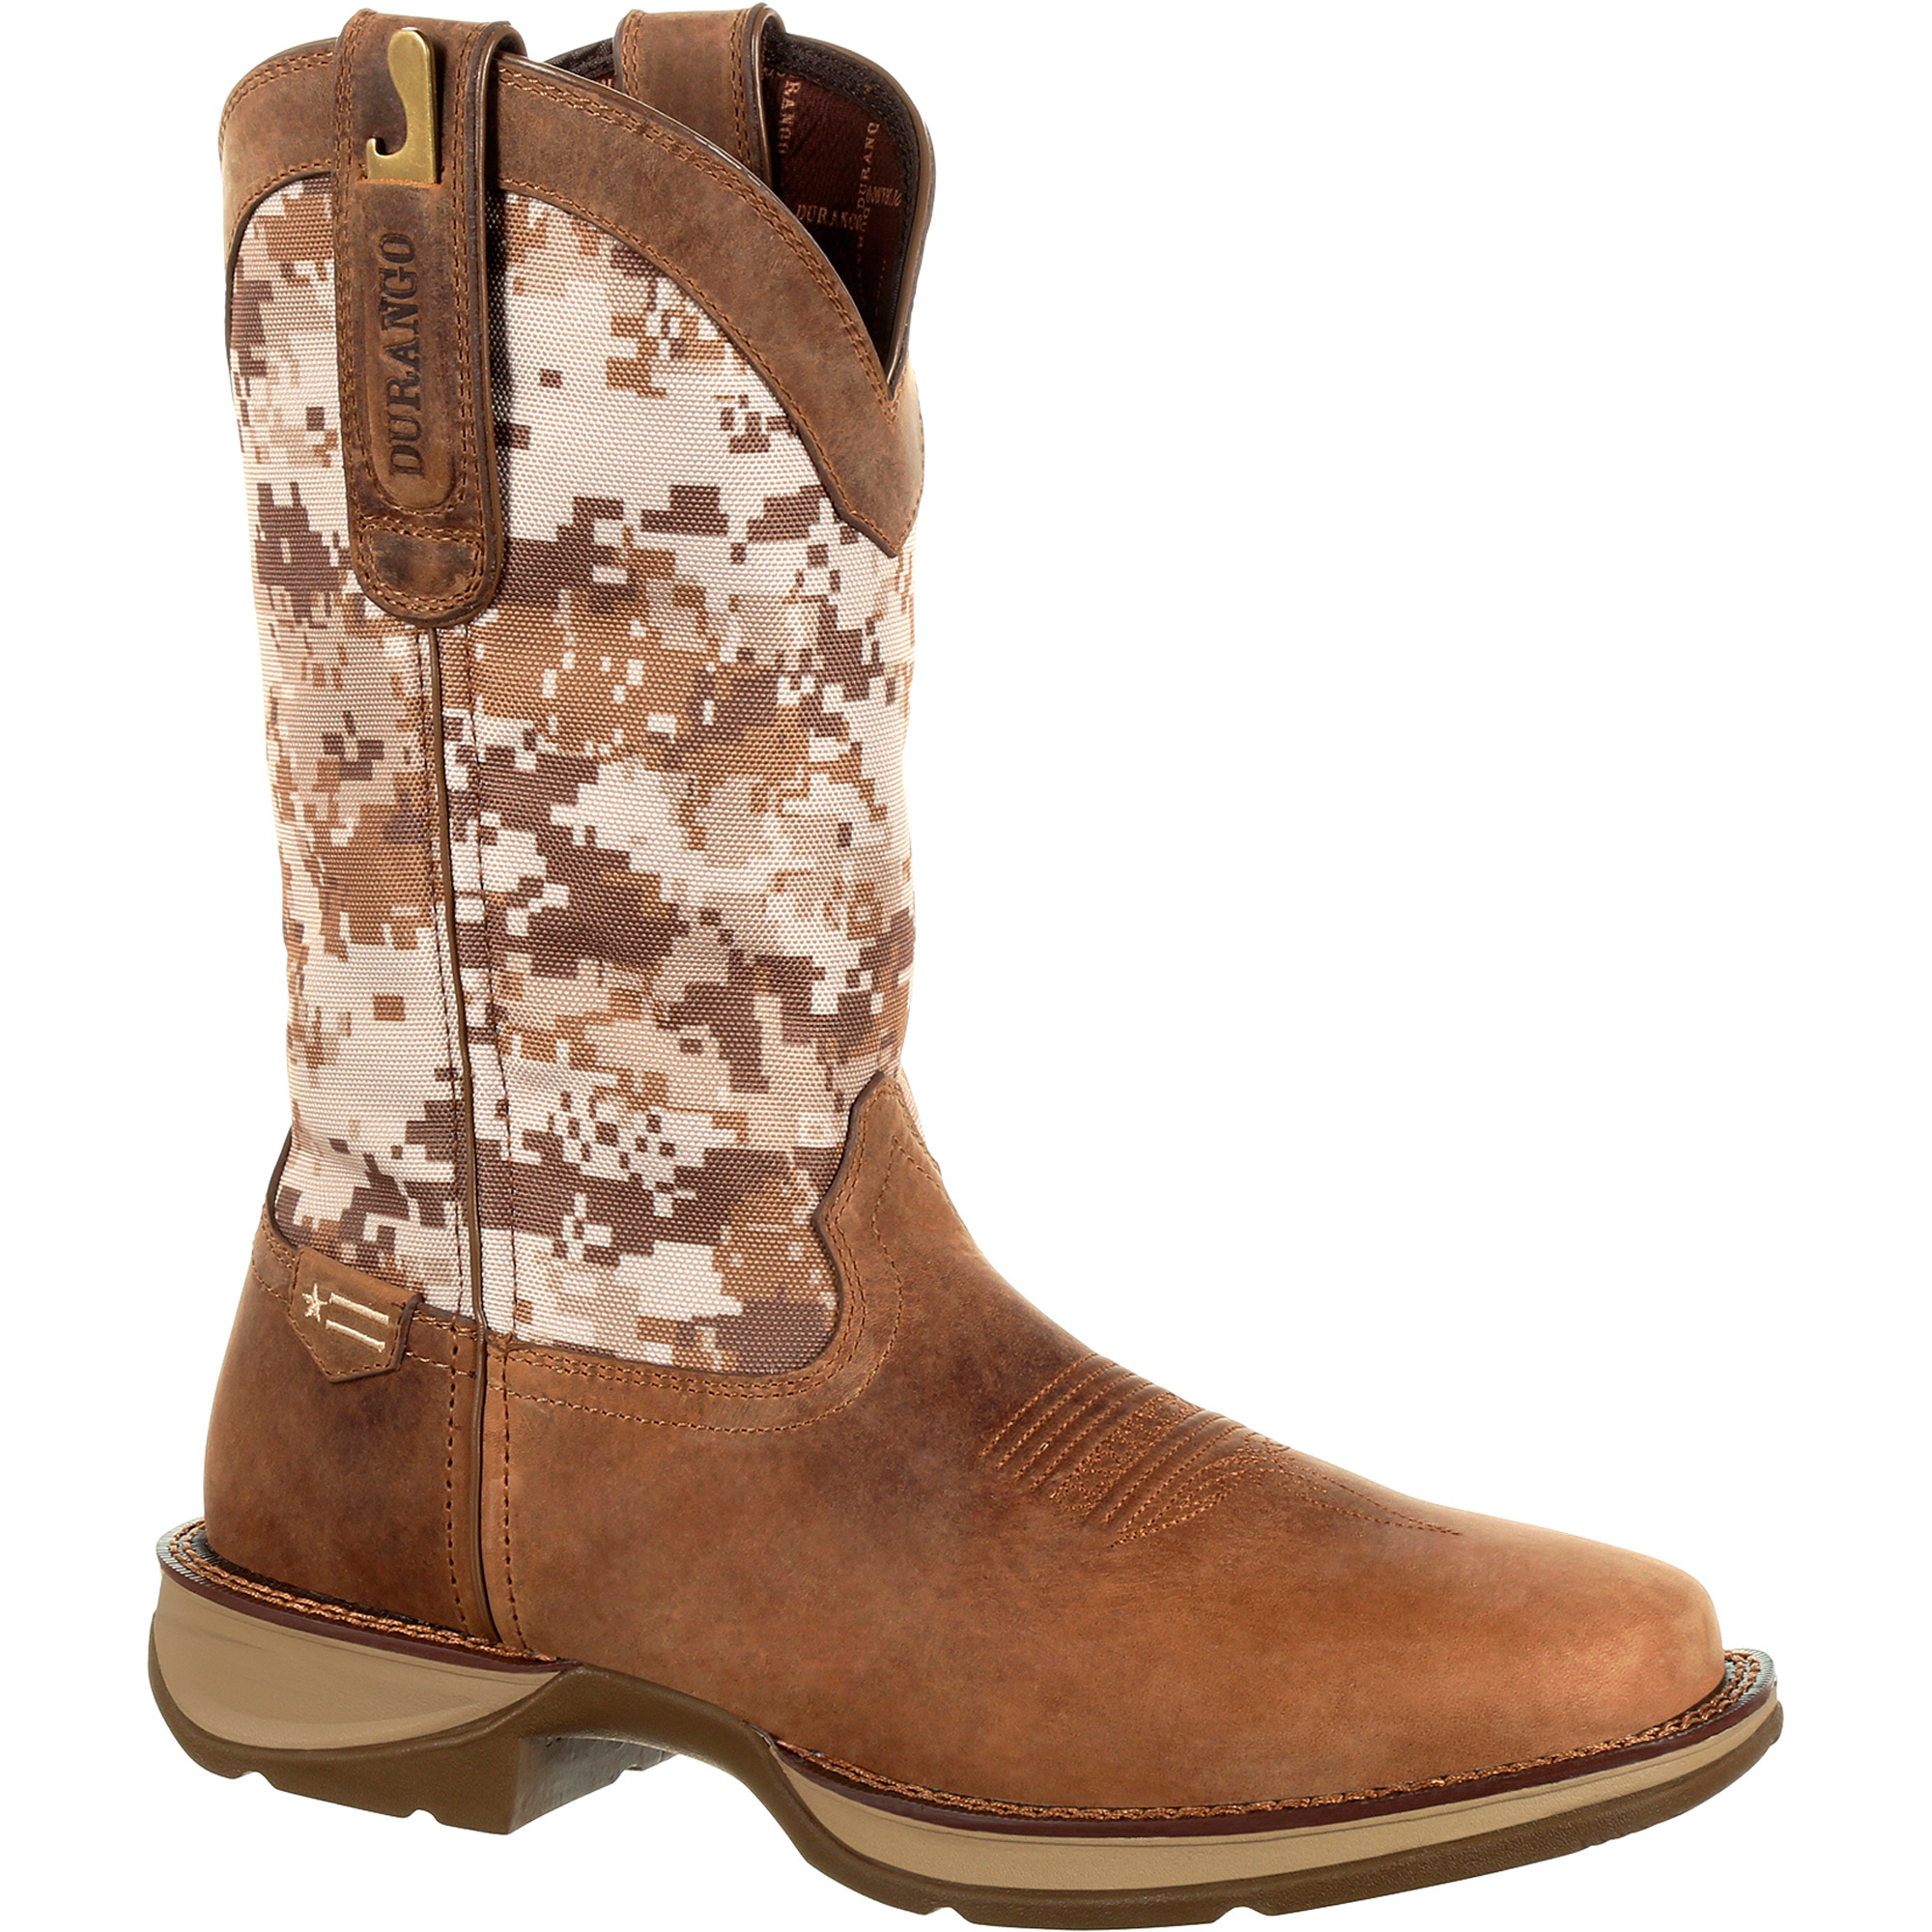 Durango Men's 12Inch Desert Camo Pull-On Rebel Western Boots â Dusty Brown/Desert Camo, Size 10 1/2 Wide, Model DDB0166